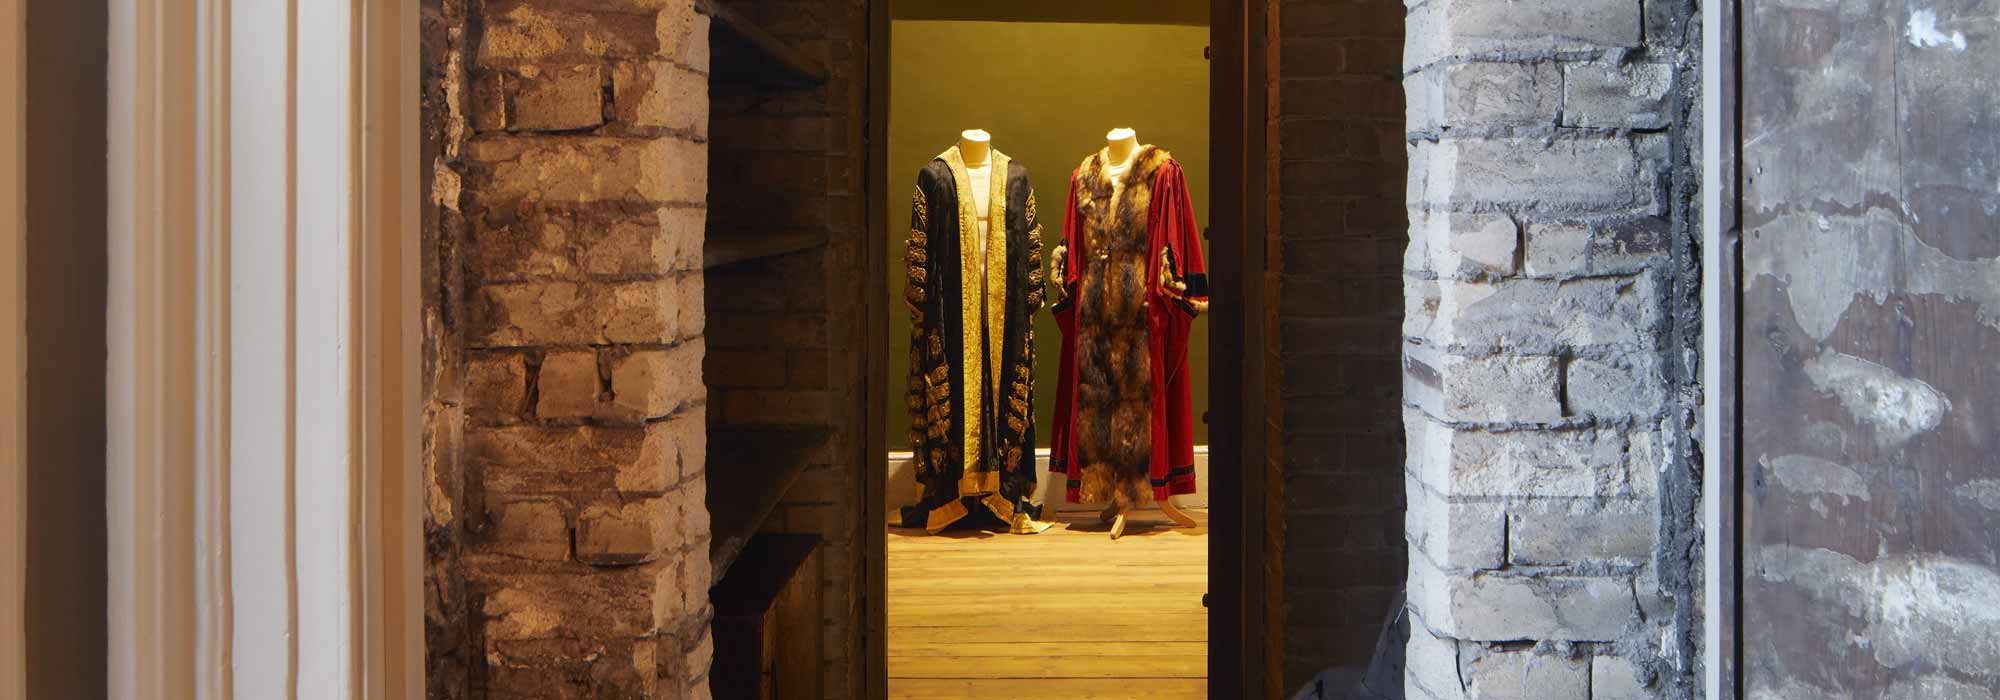 stone doorway through which 2 mannequins display cloaks